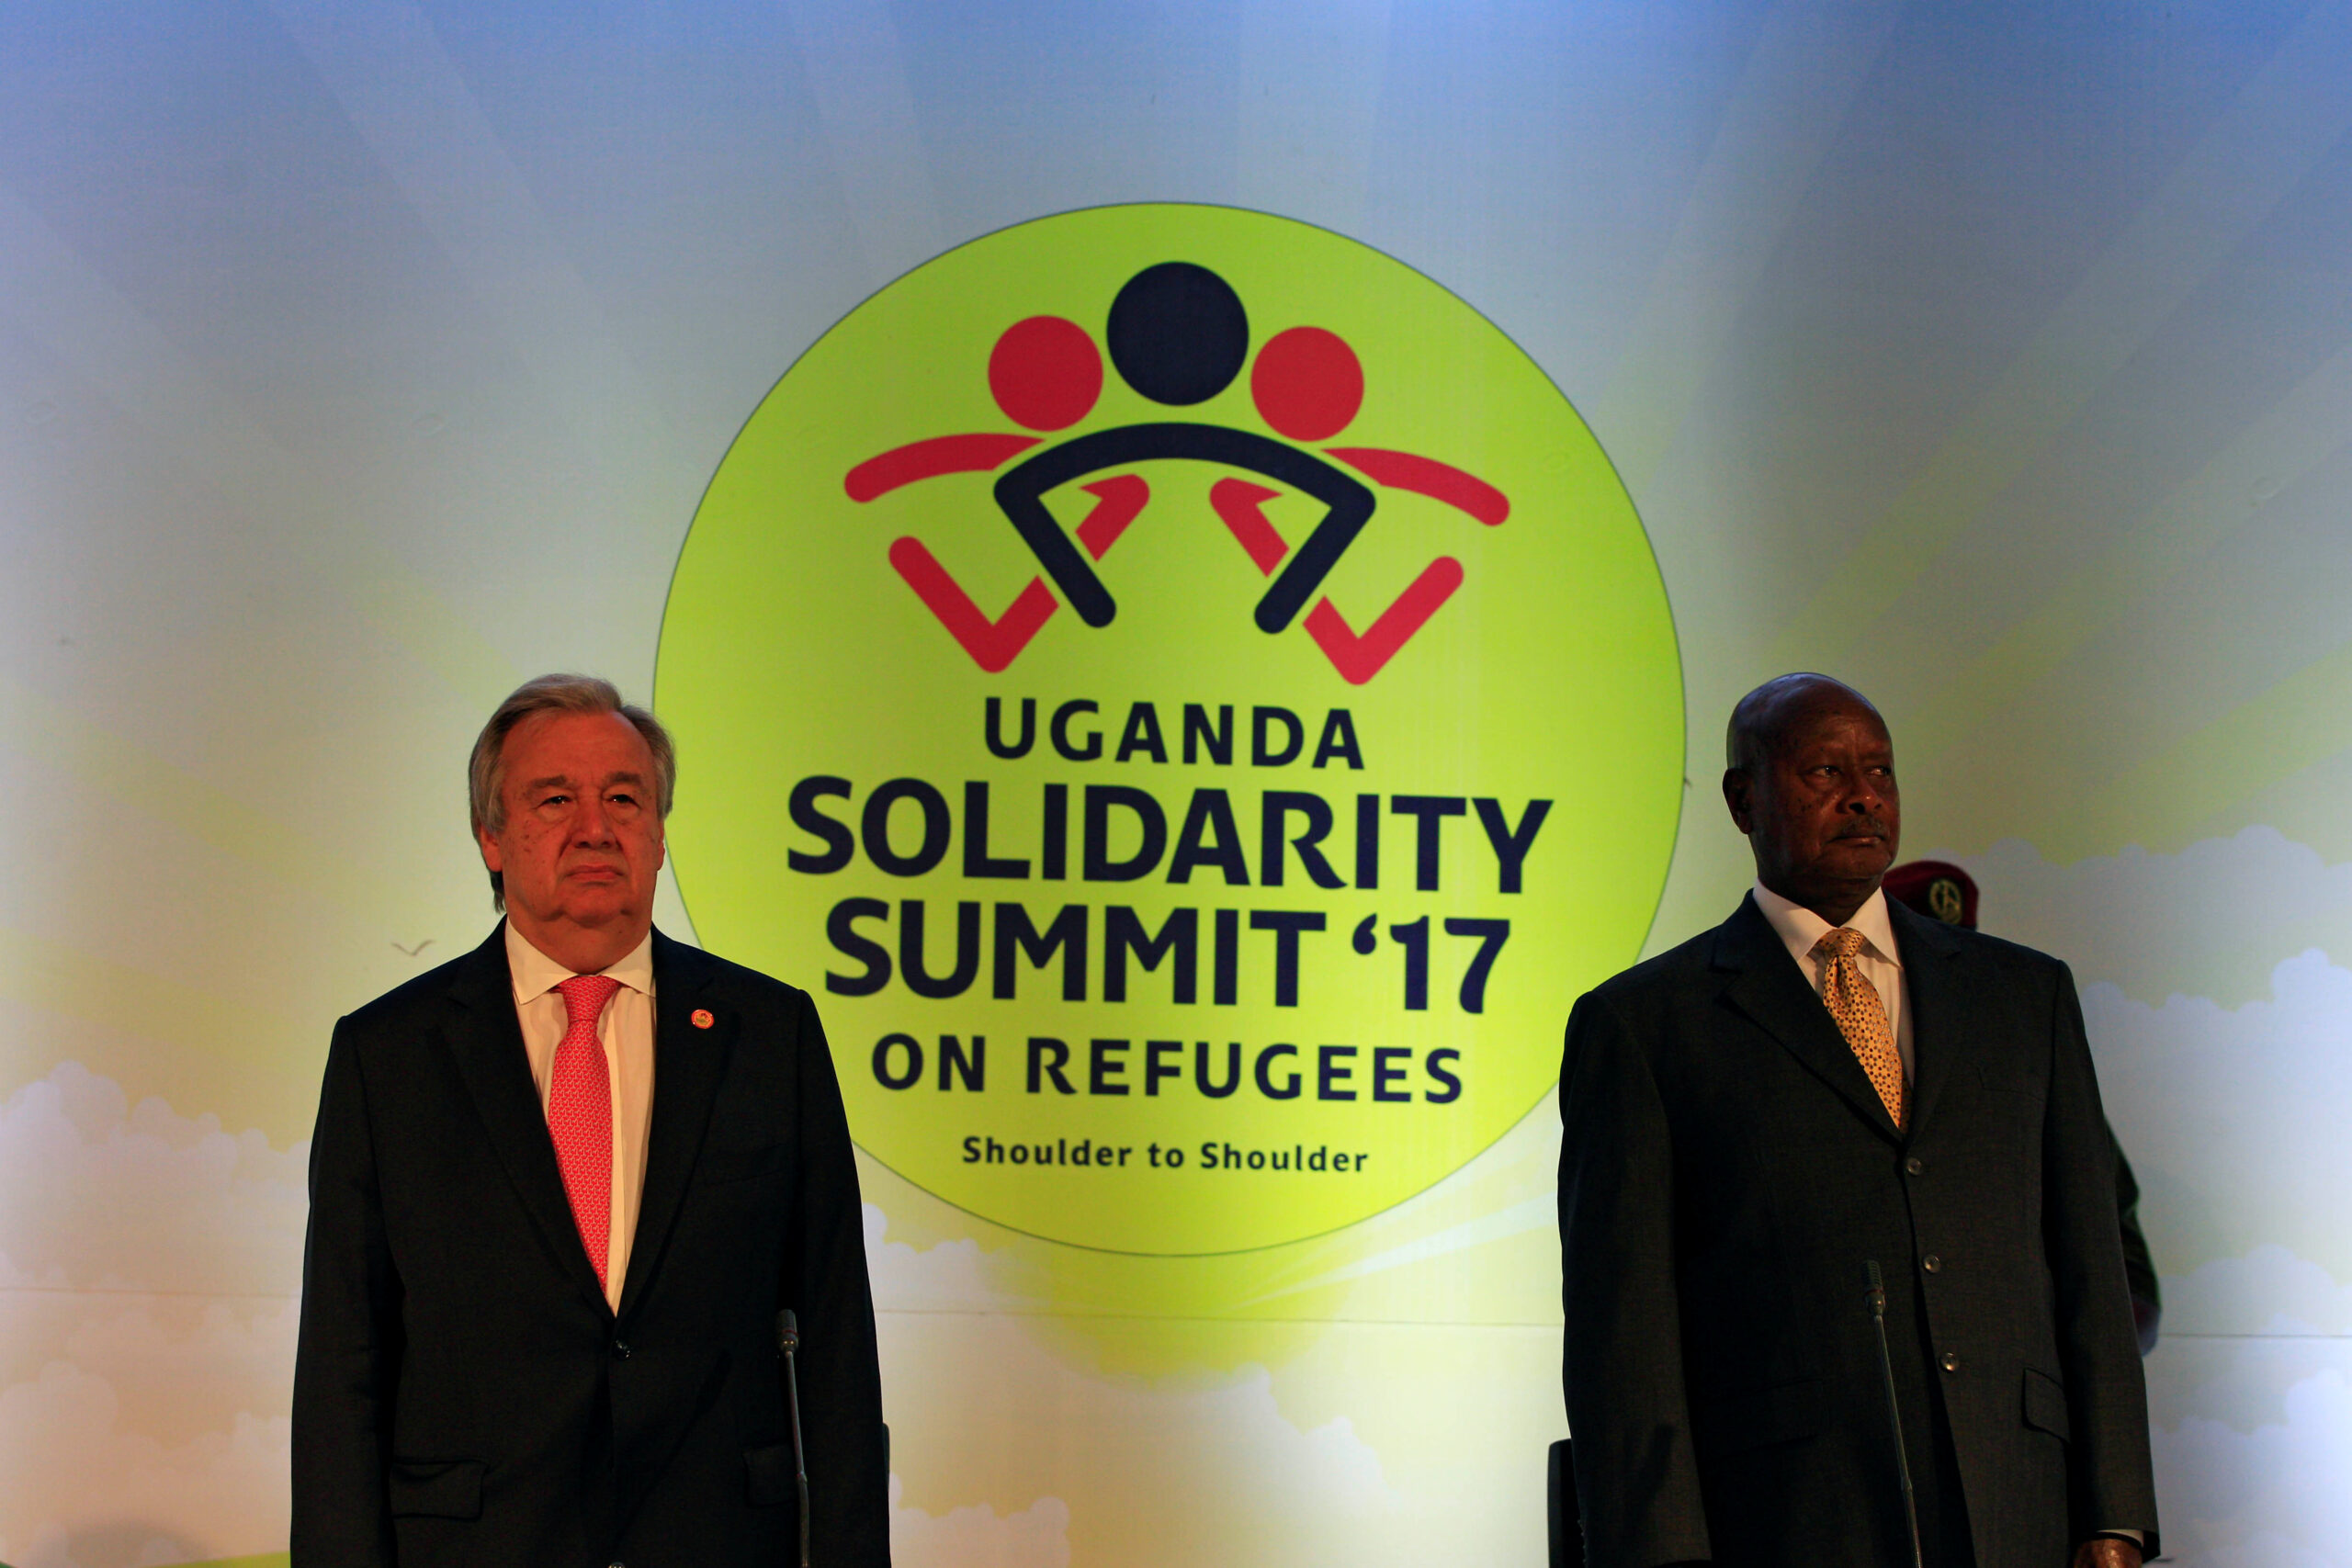 Statement on Uganda Solidarity Summit 2017